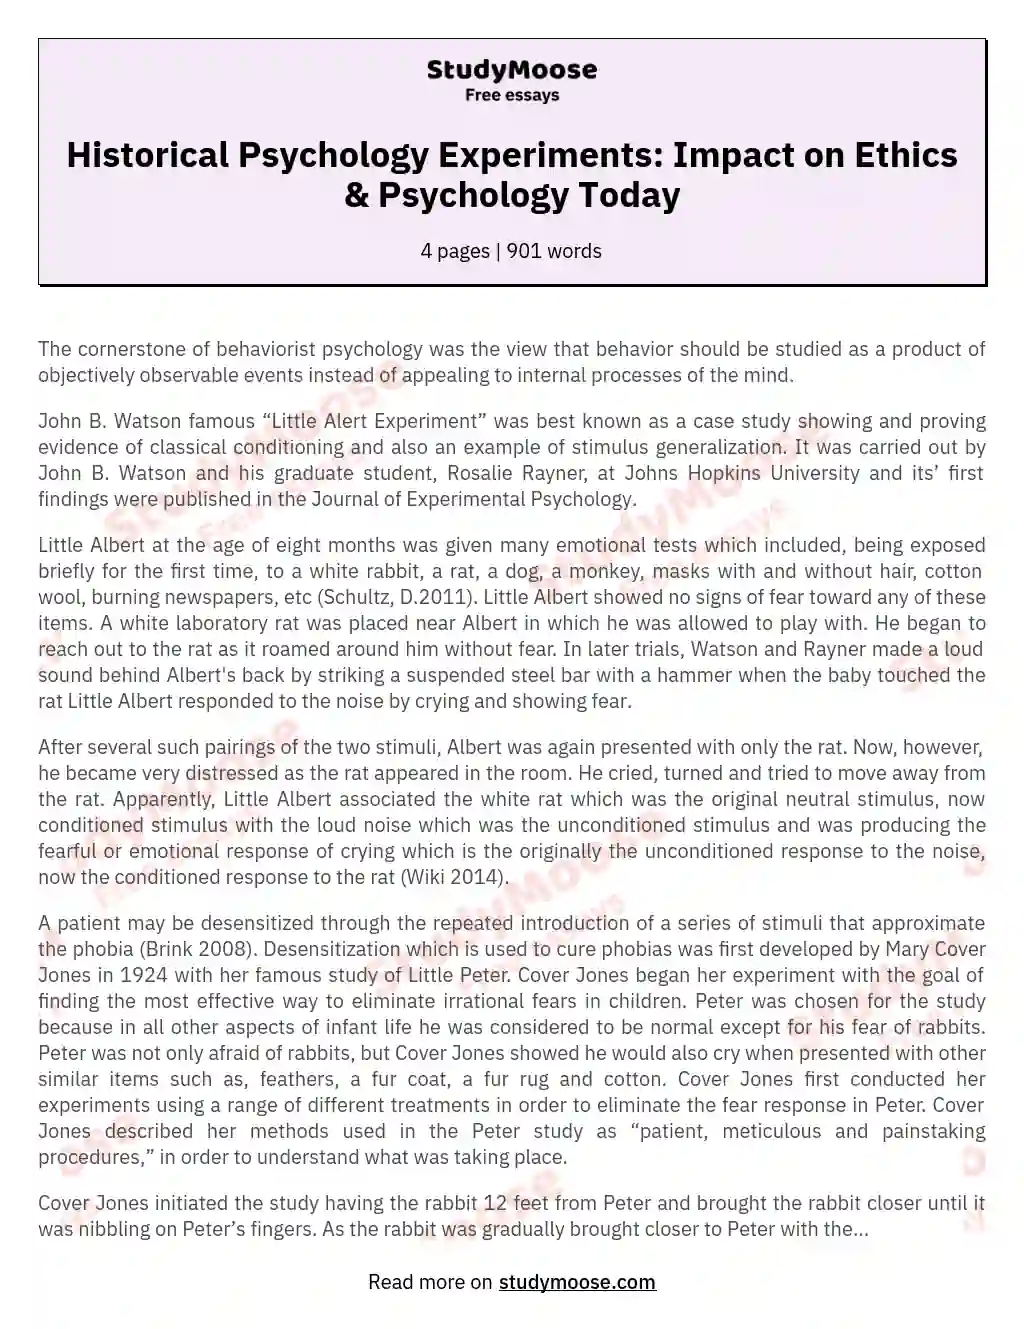 Historical Psychology Experiments: Impact on Ethics & Psychology Today essay